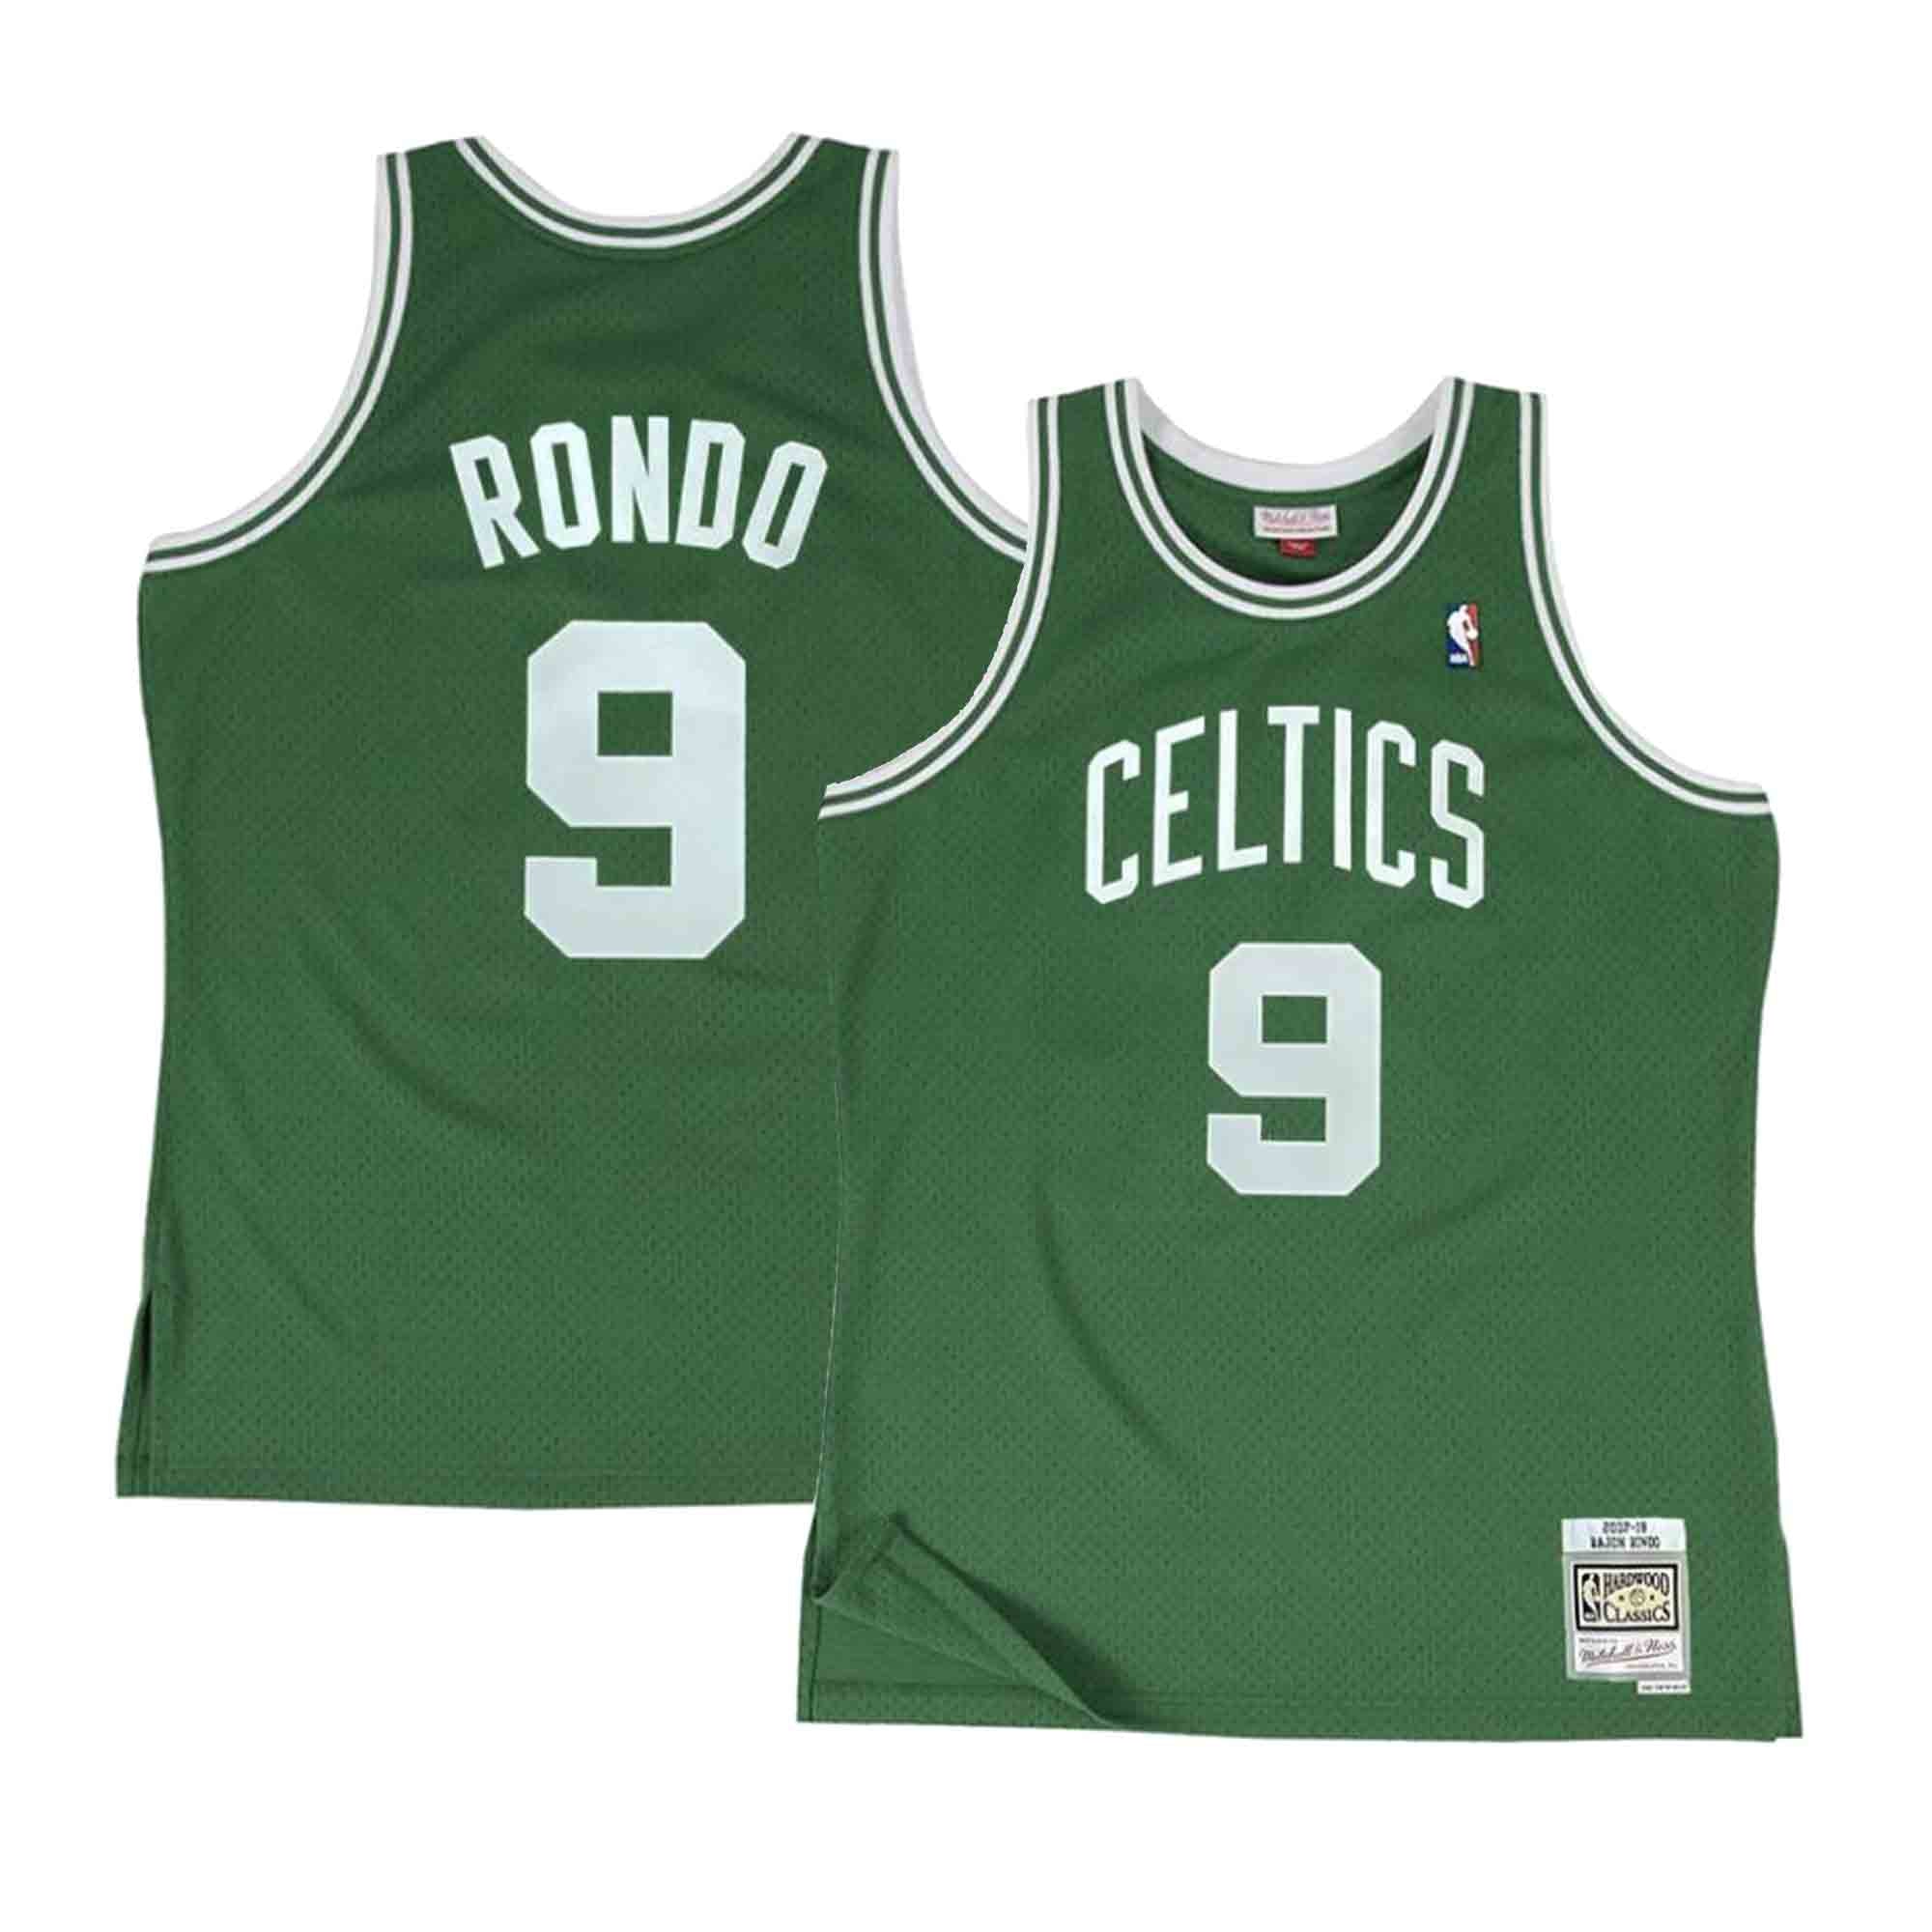 Boston Celtics Jerseys